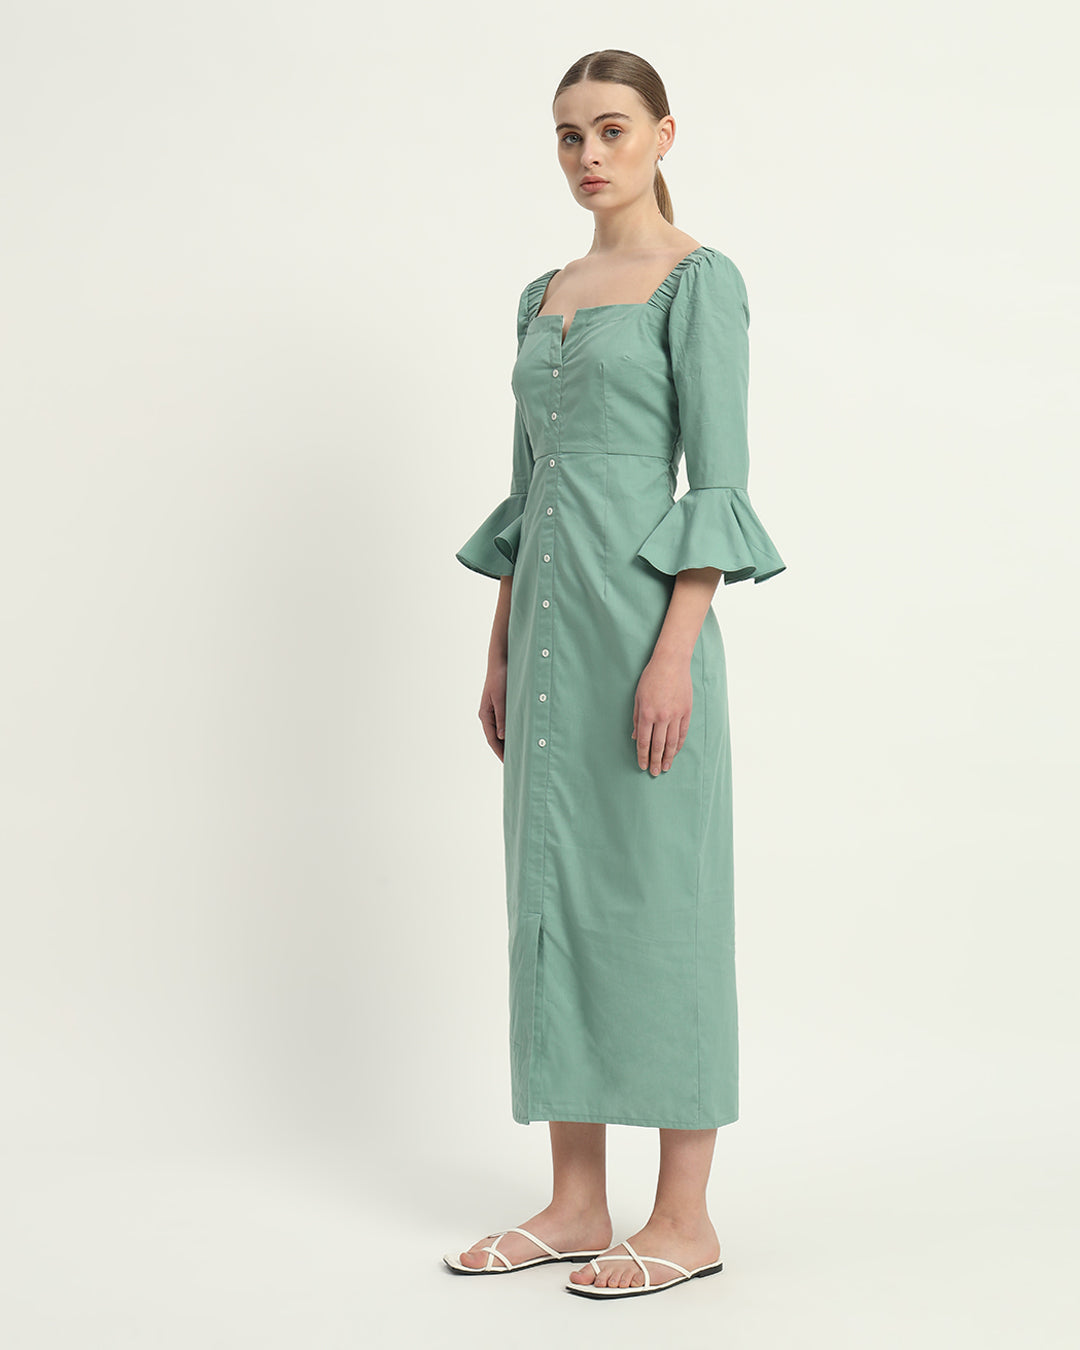 The Mint Rosendale Cotton Dress